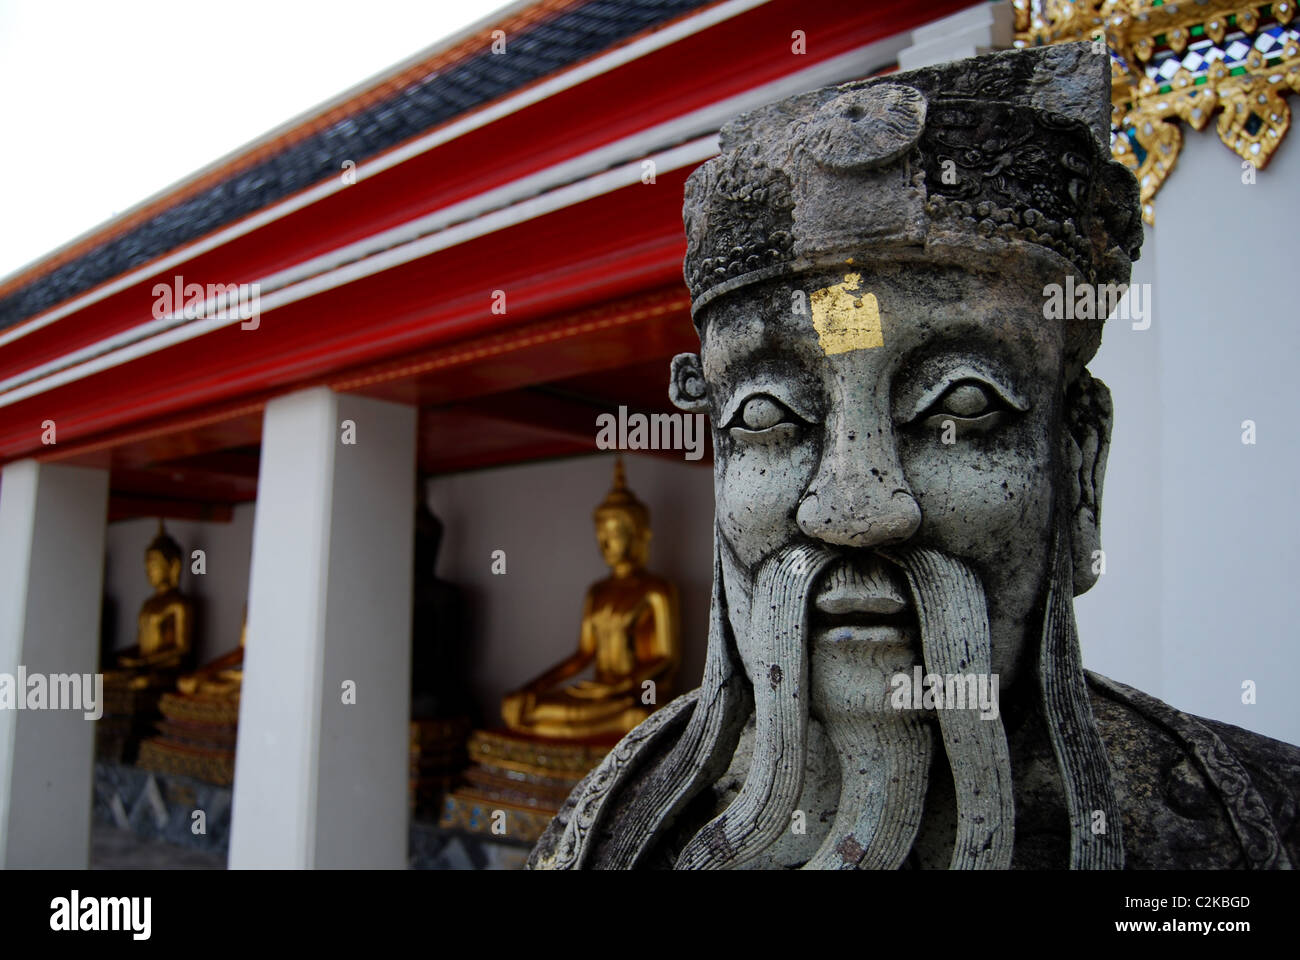 Wat Pho Buddhist temple in Phra Nakhon district, Bangkok, Thailand Stock Photo